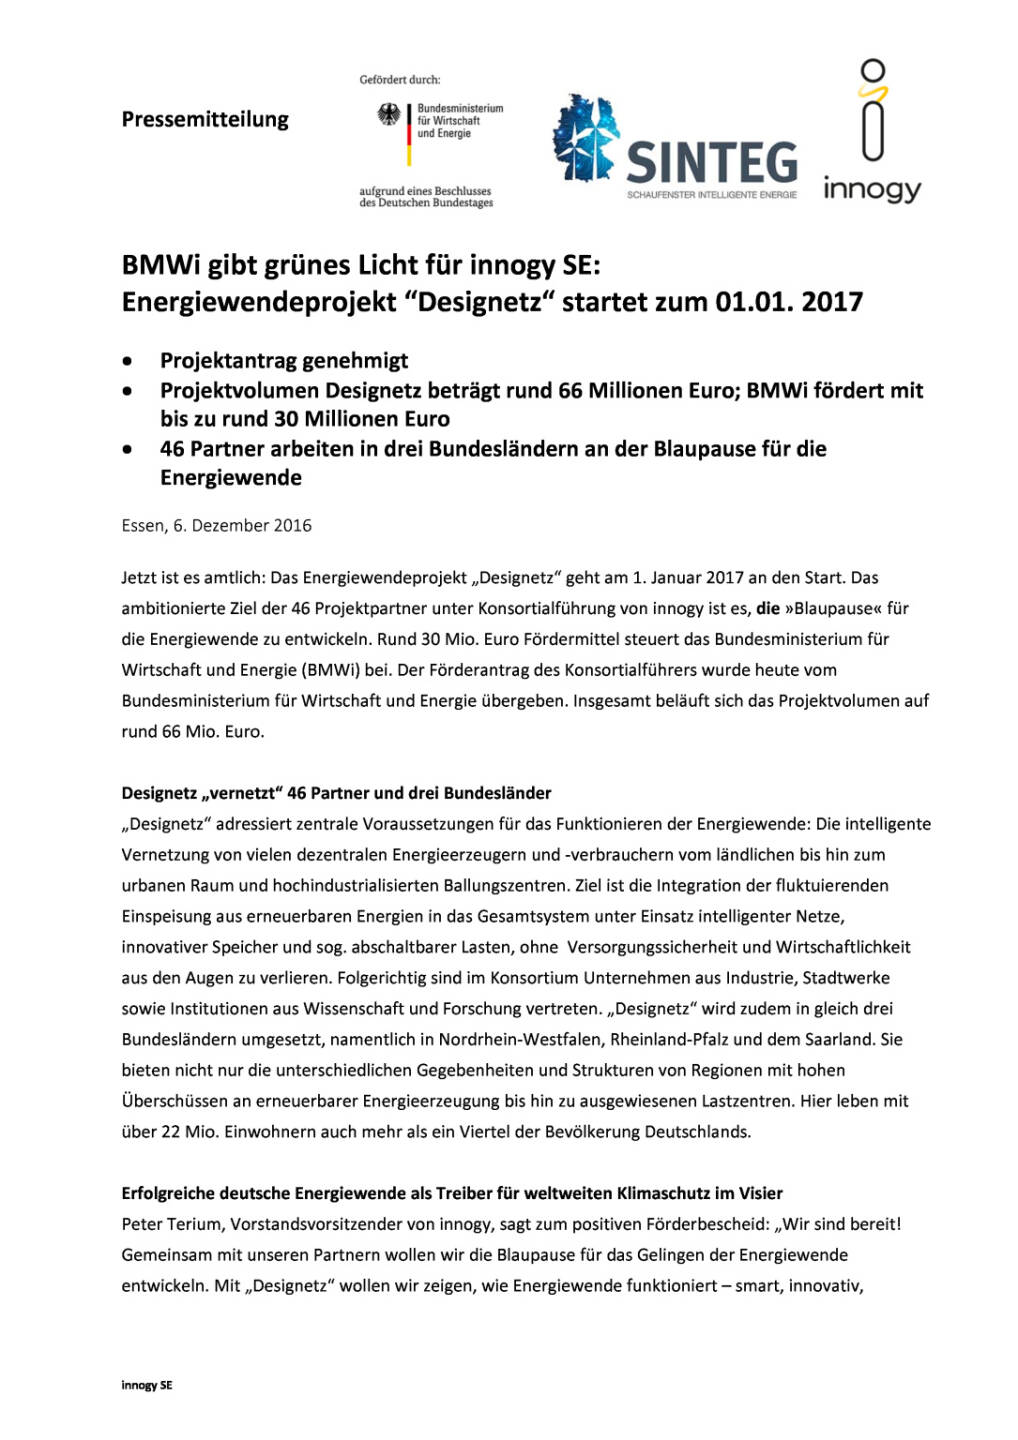 BMWi gibt grünes Licht für innogy SE, Seite 1/3, komplettes Dokument unter http://boerse-social.com/static/uploads/file_2006_bmwi_gibt_grünes_licht_für_innogy_se.pdf